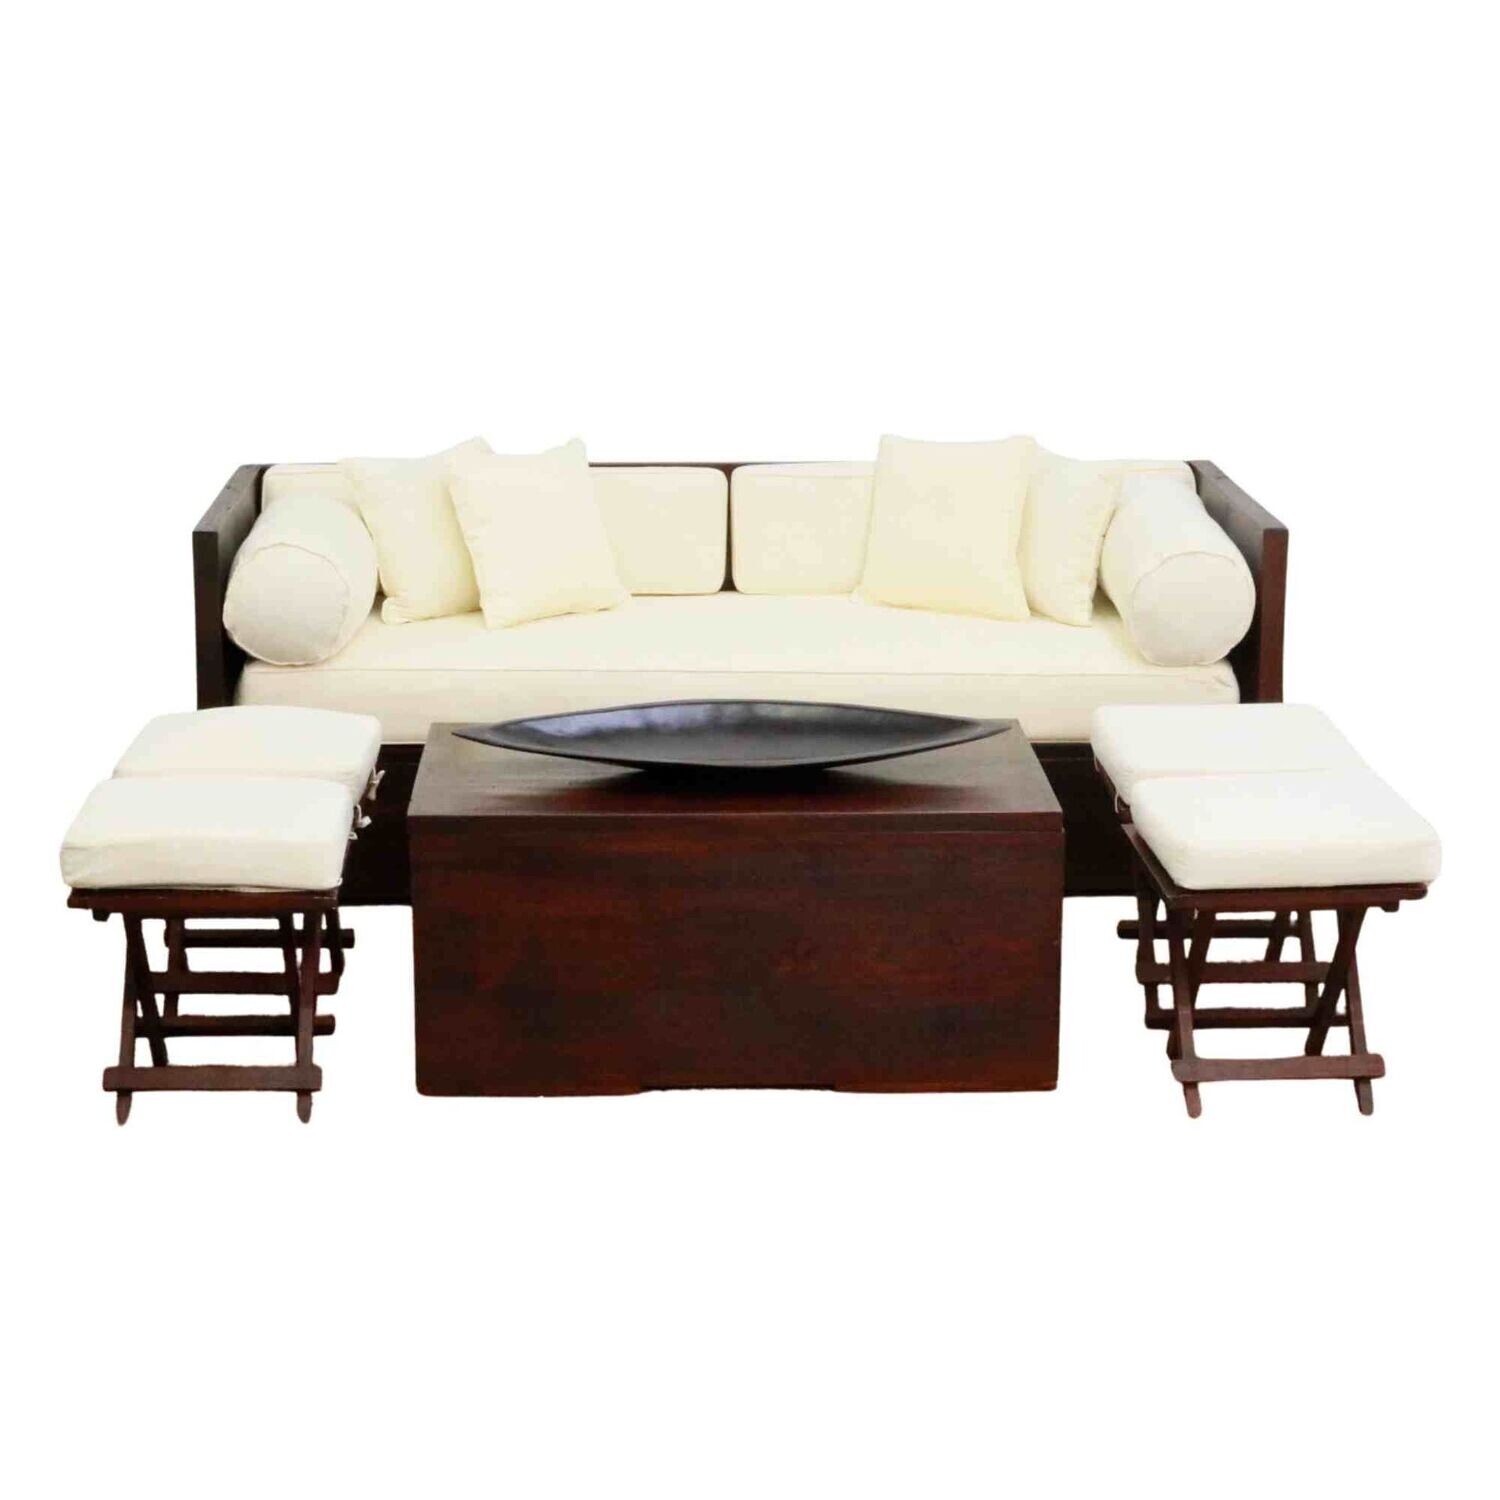 Sofa; dark wood with cream cushions - 3 seater